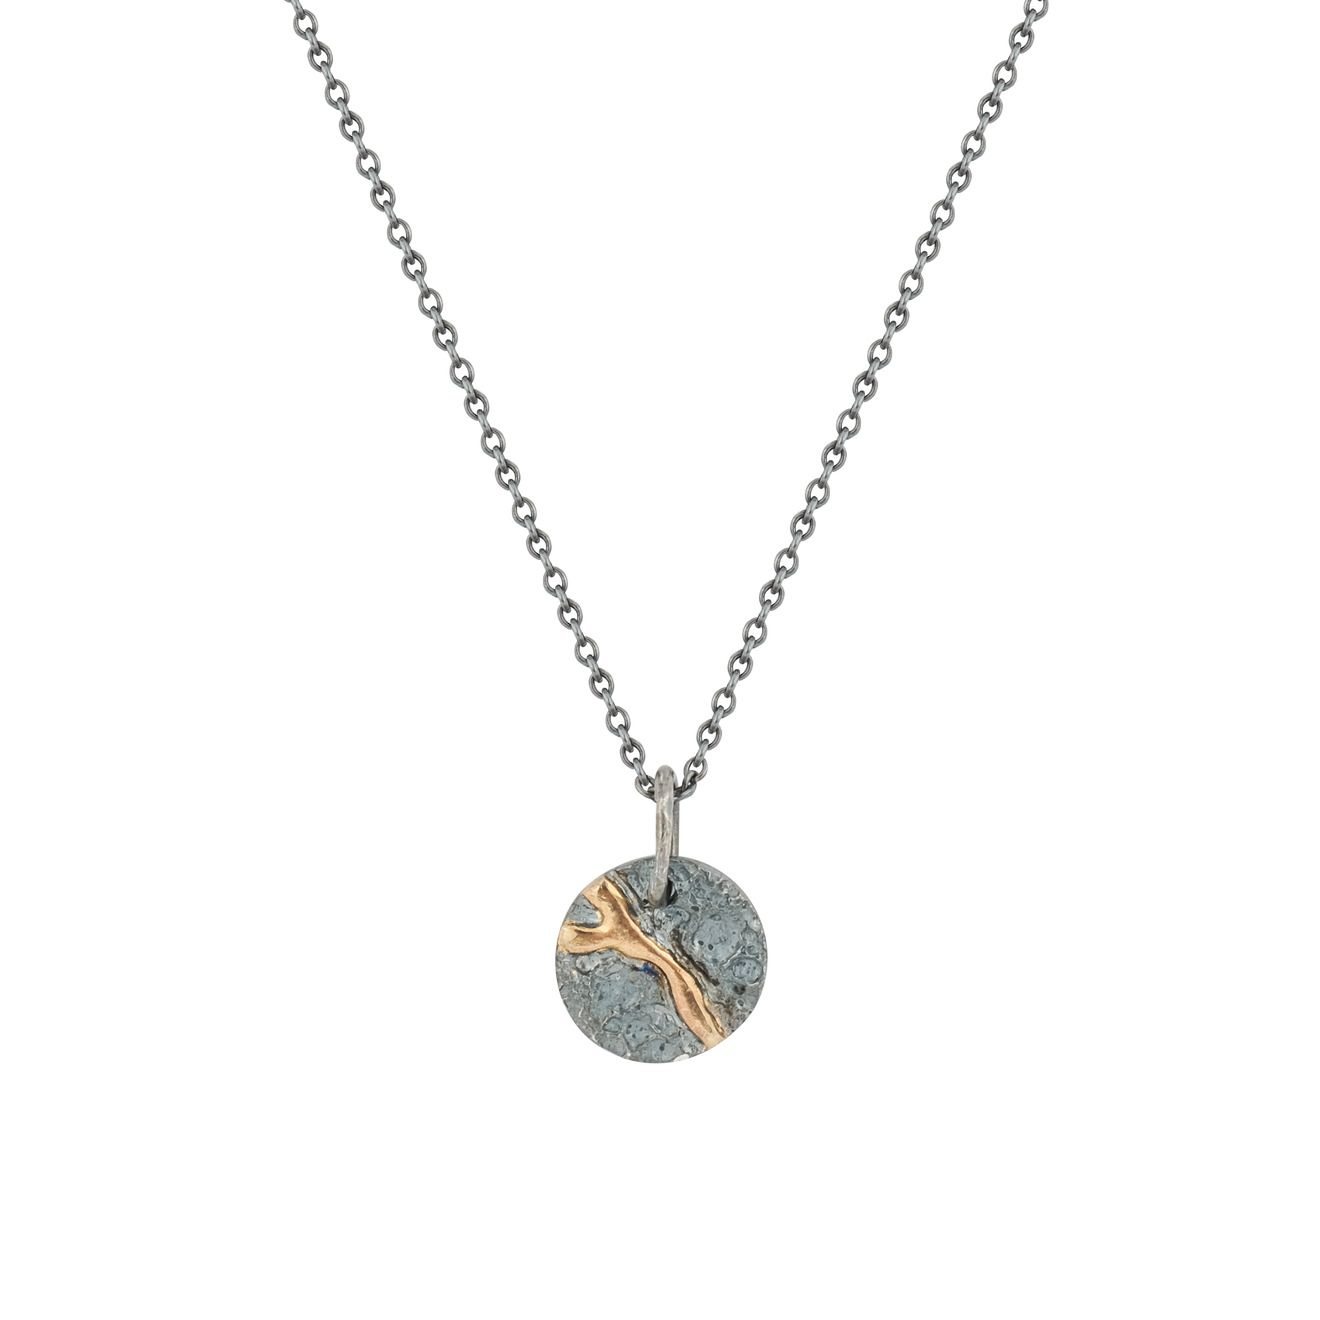 Kintsugi Jewelry Кулон Volcanic power из серебра со вставкой из золота kintsugi jewelry кольцо из серебра со вставкой из шпинели